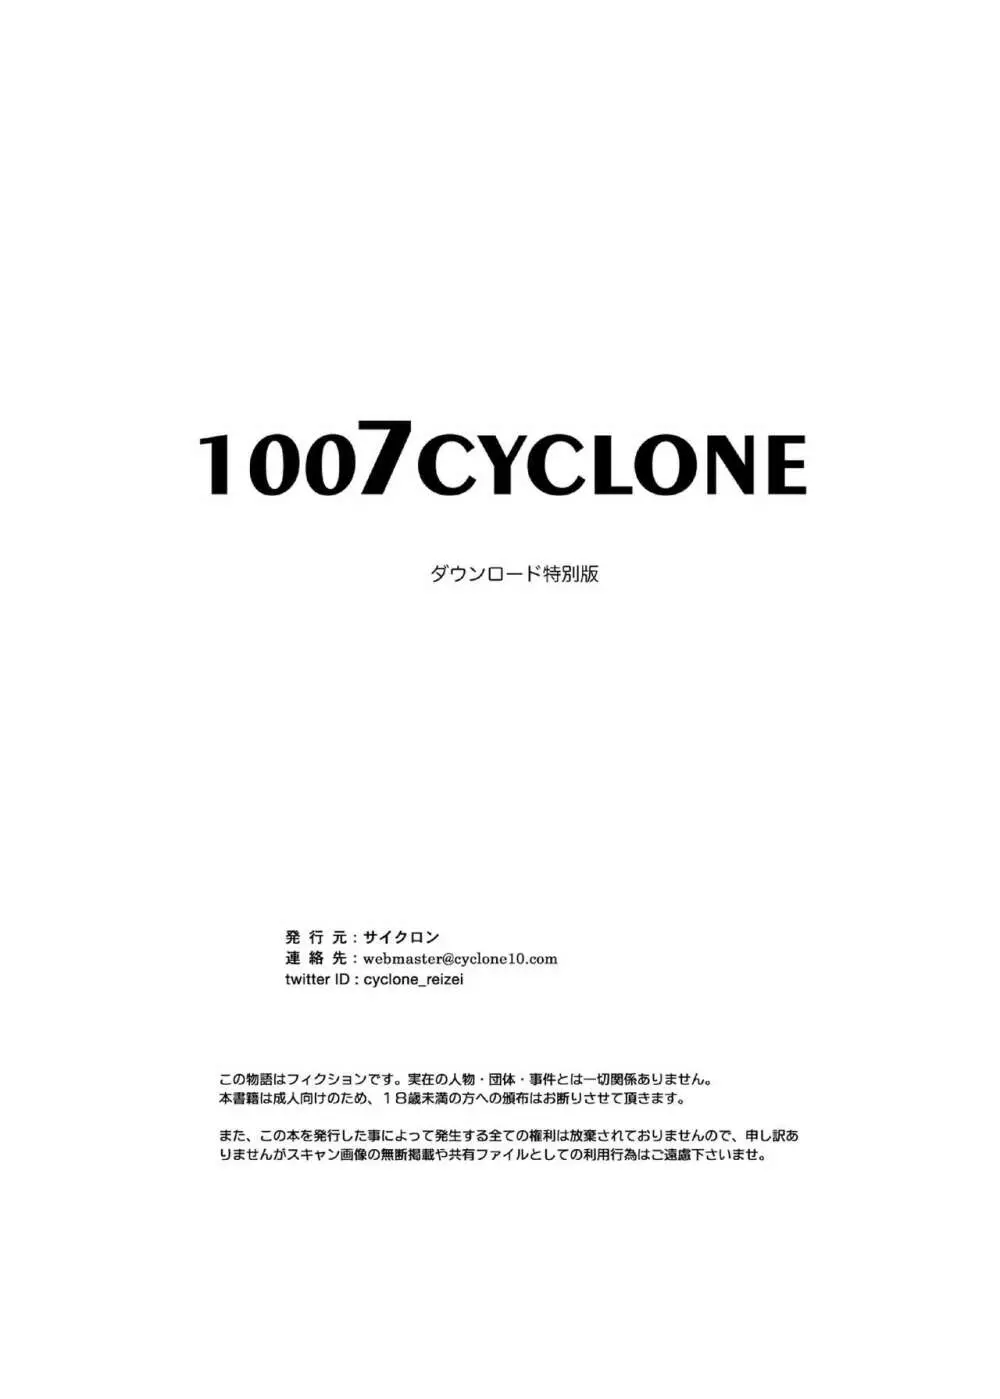 1007CYCLONE 170ページ